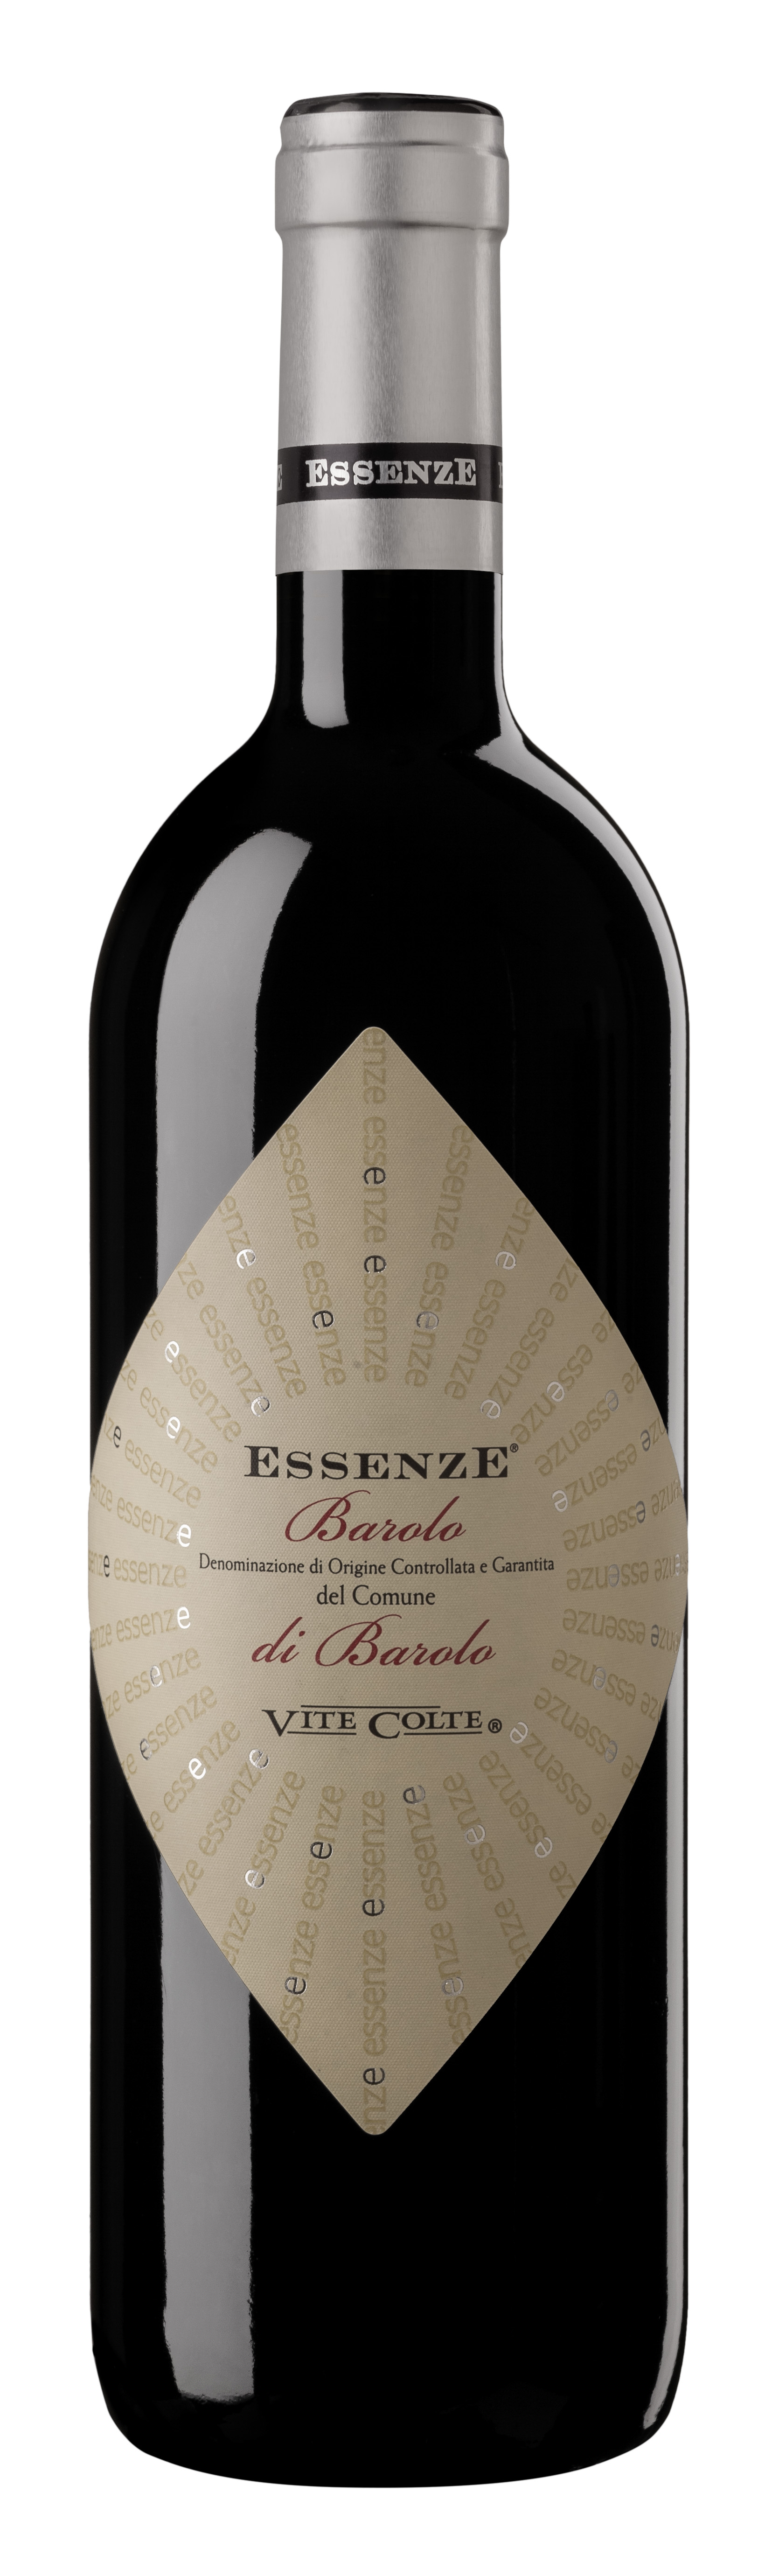 2013 Barolo "Essenze" DOCG 0.75l